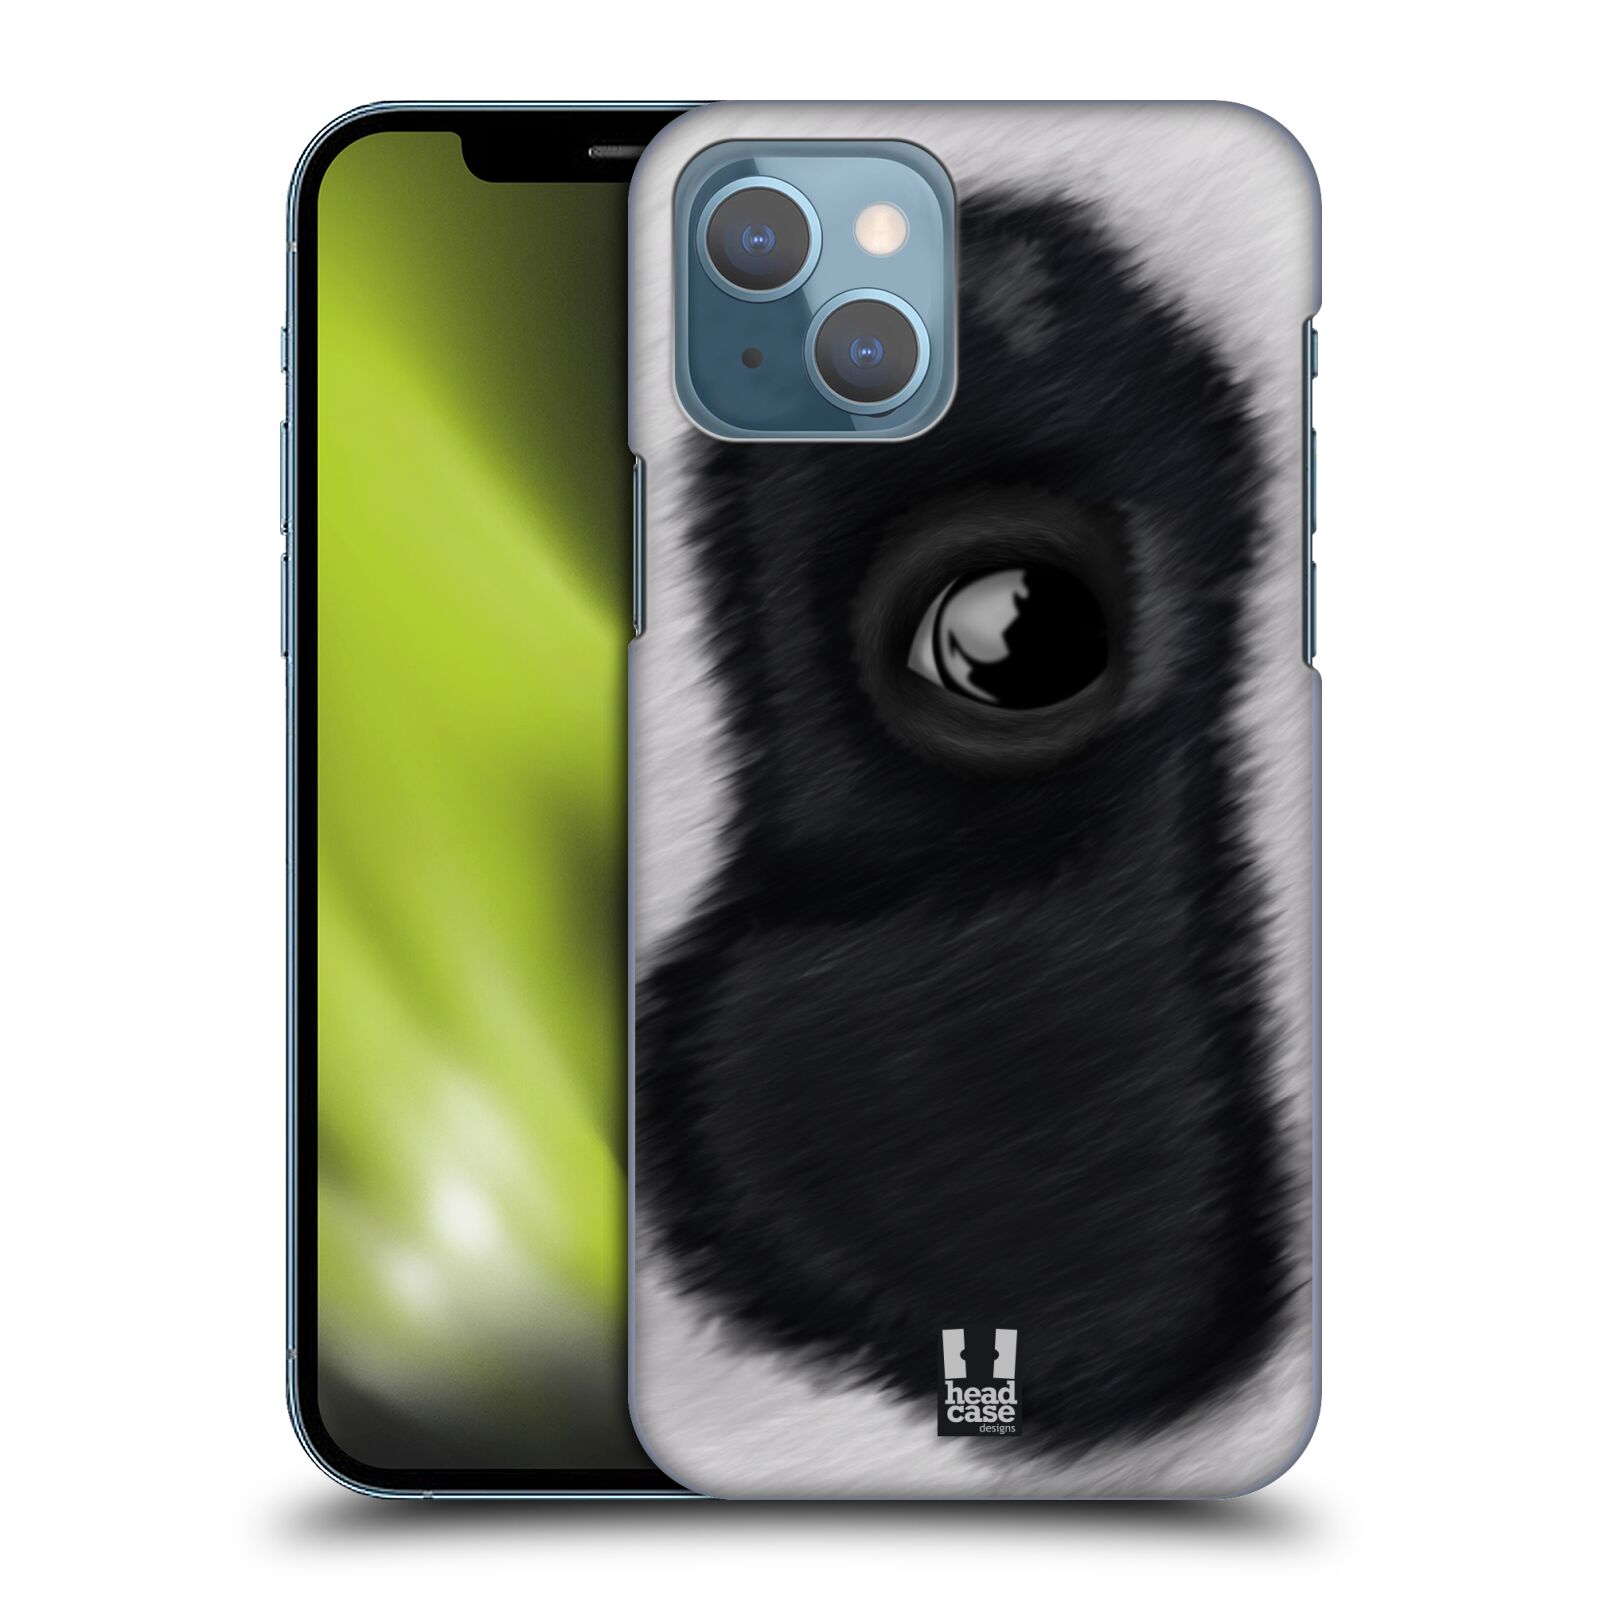 Plastový obal HEAD CASE na mobil Apple Iphone 13 vzor pohled zvířete oko panda